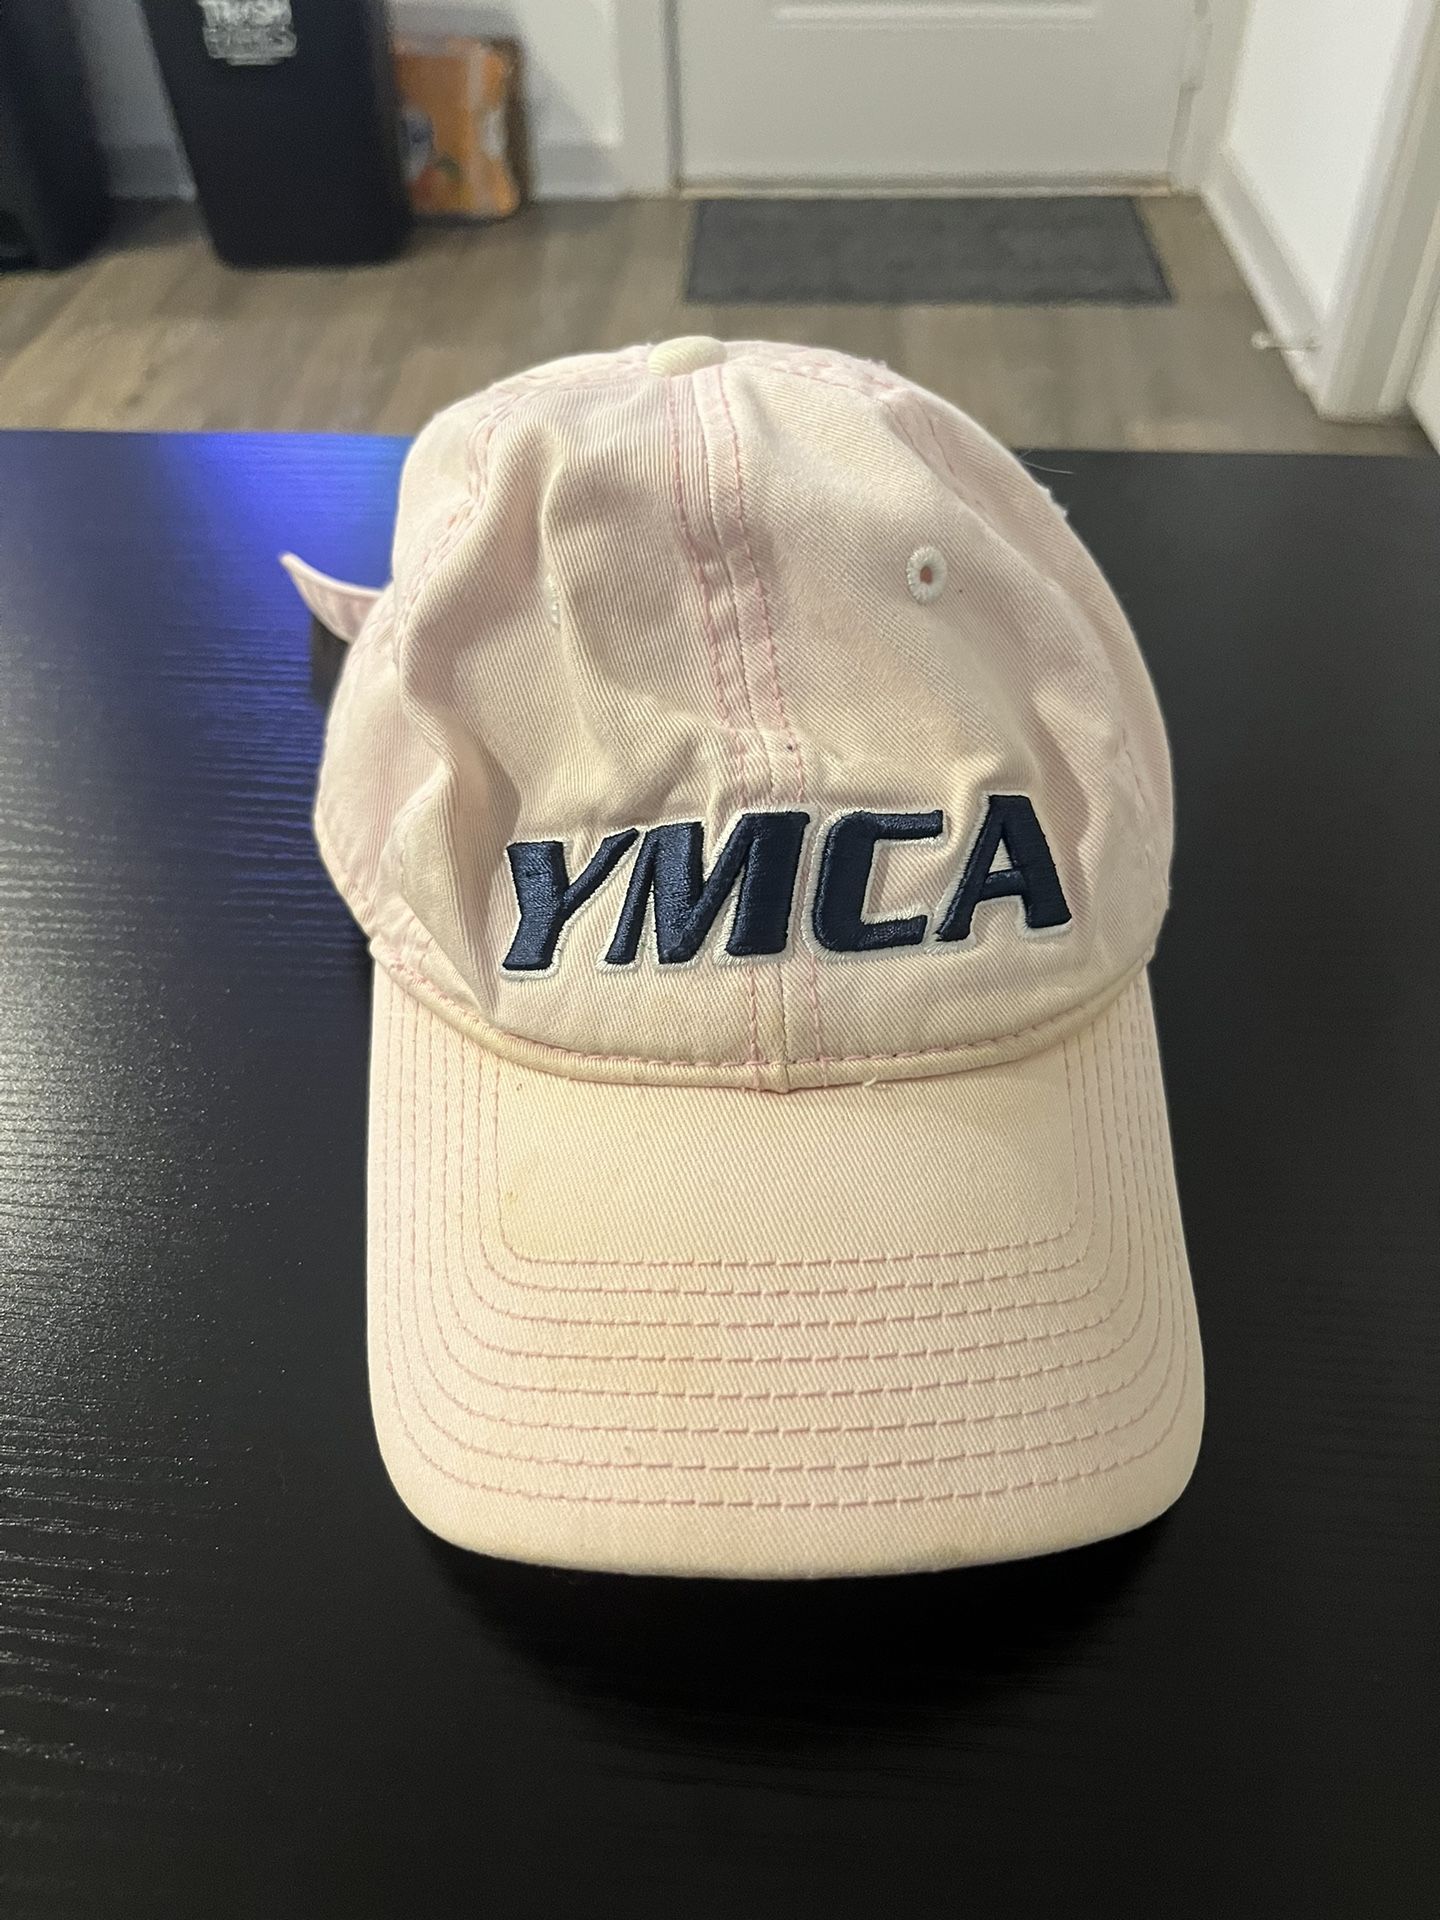 Pink YMCA Hat